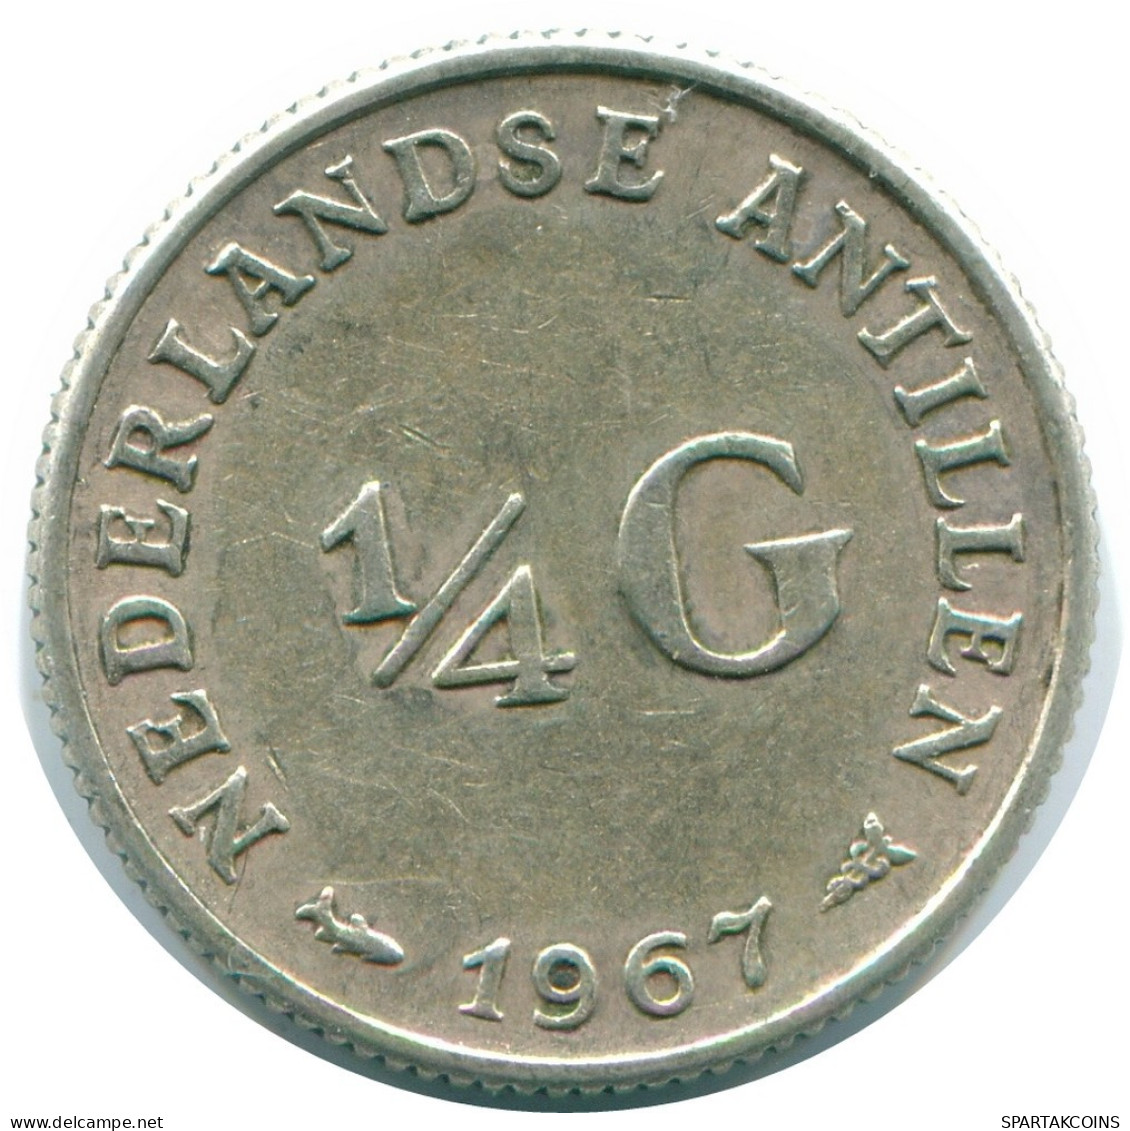 1/4 GULDEN 1967 NETHERLANDS ANTILLES SILVER Colonial Coin #NL11528.4.U.A - Antillas Neerlandesas